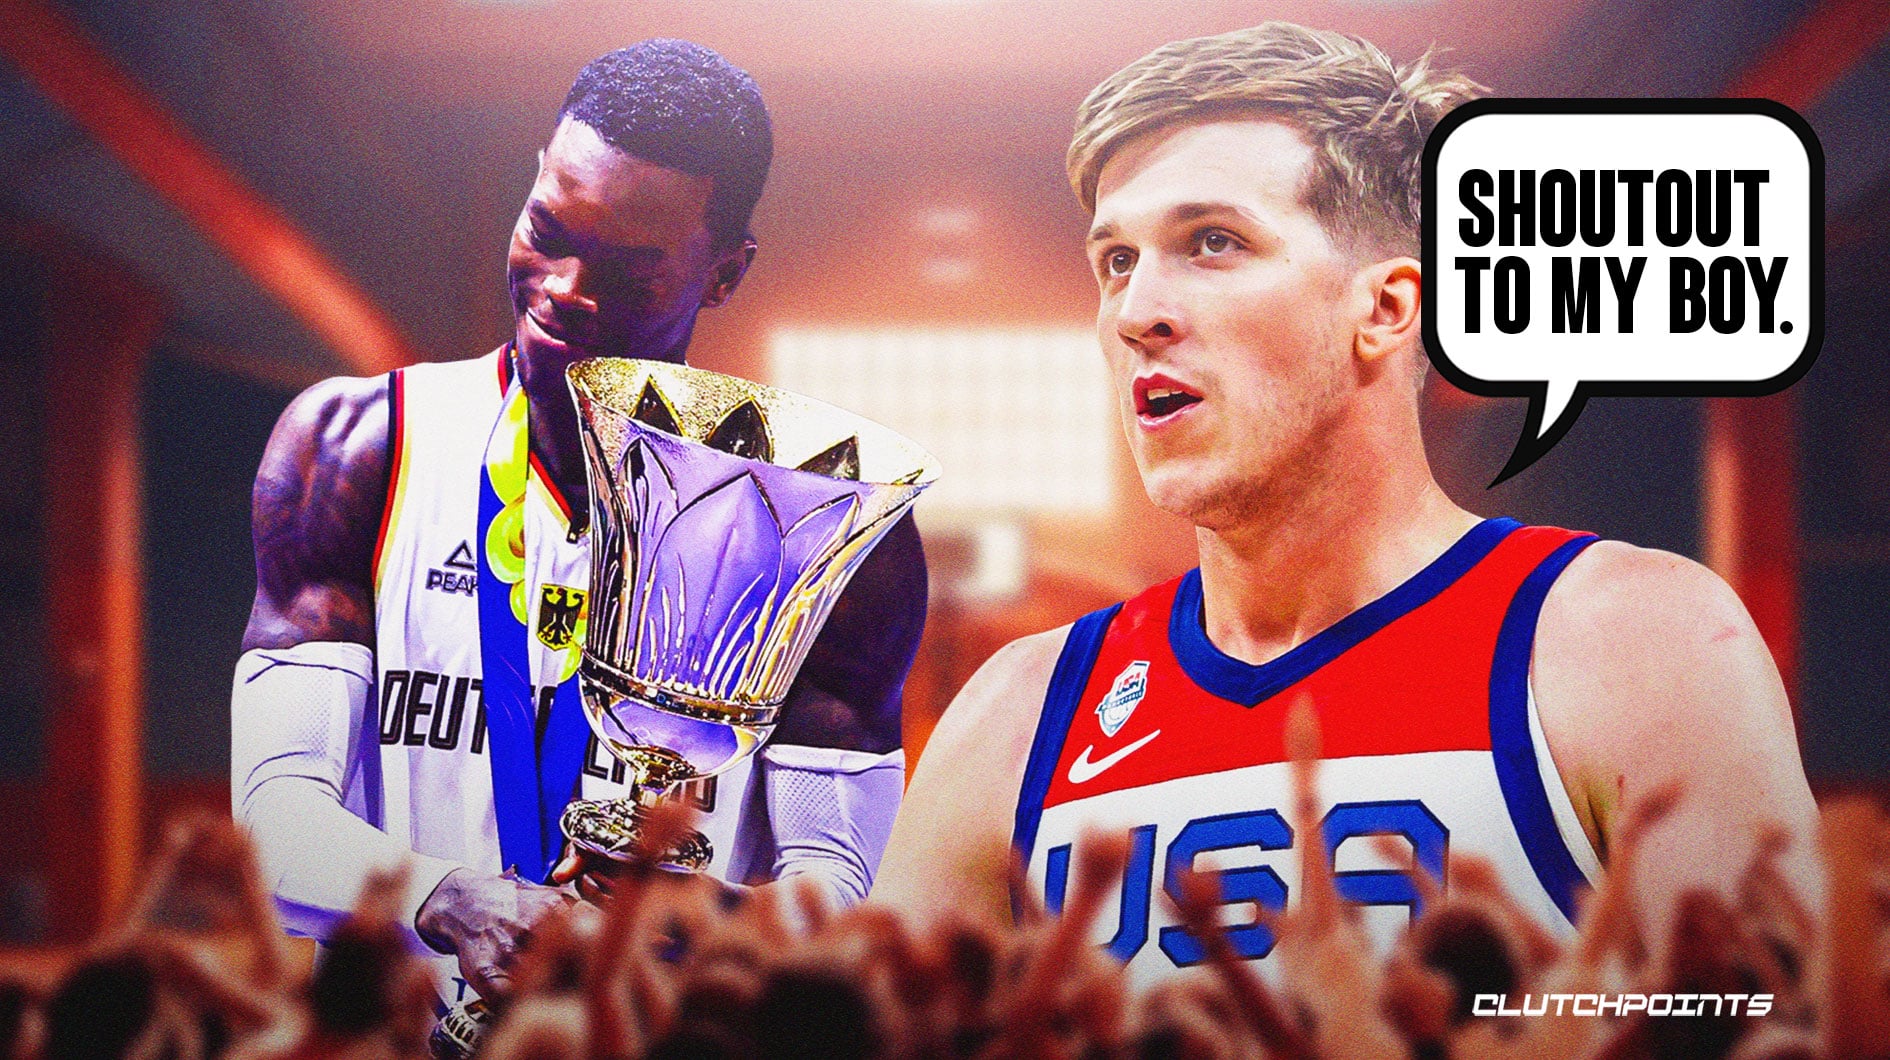 USA men's basketball loses No. 1 FIBA ranking, Spain overtakes top